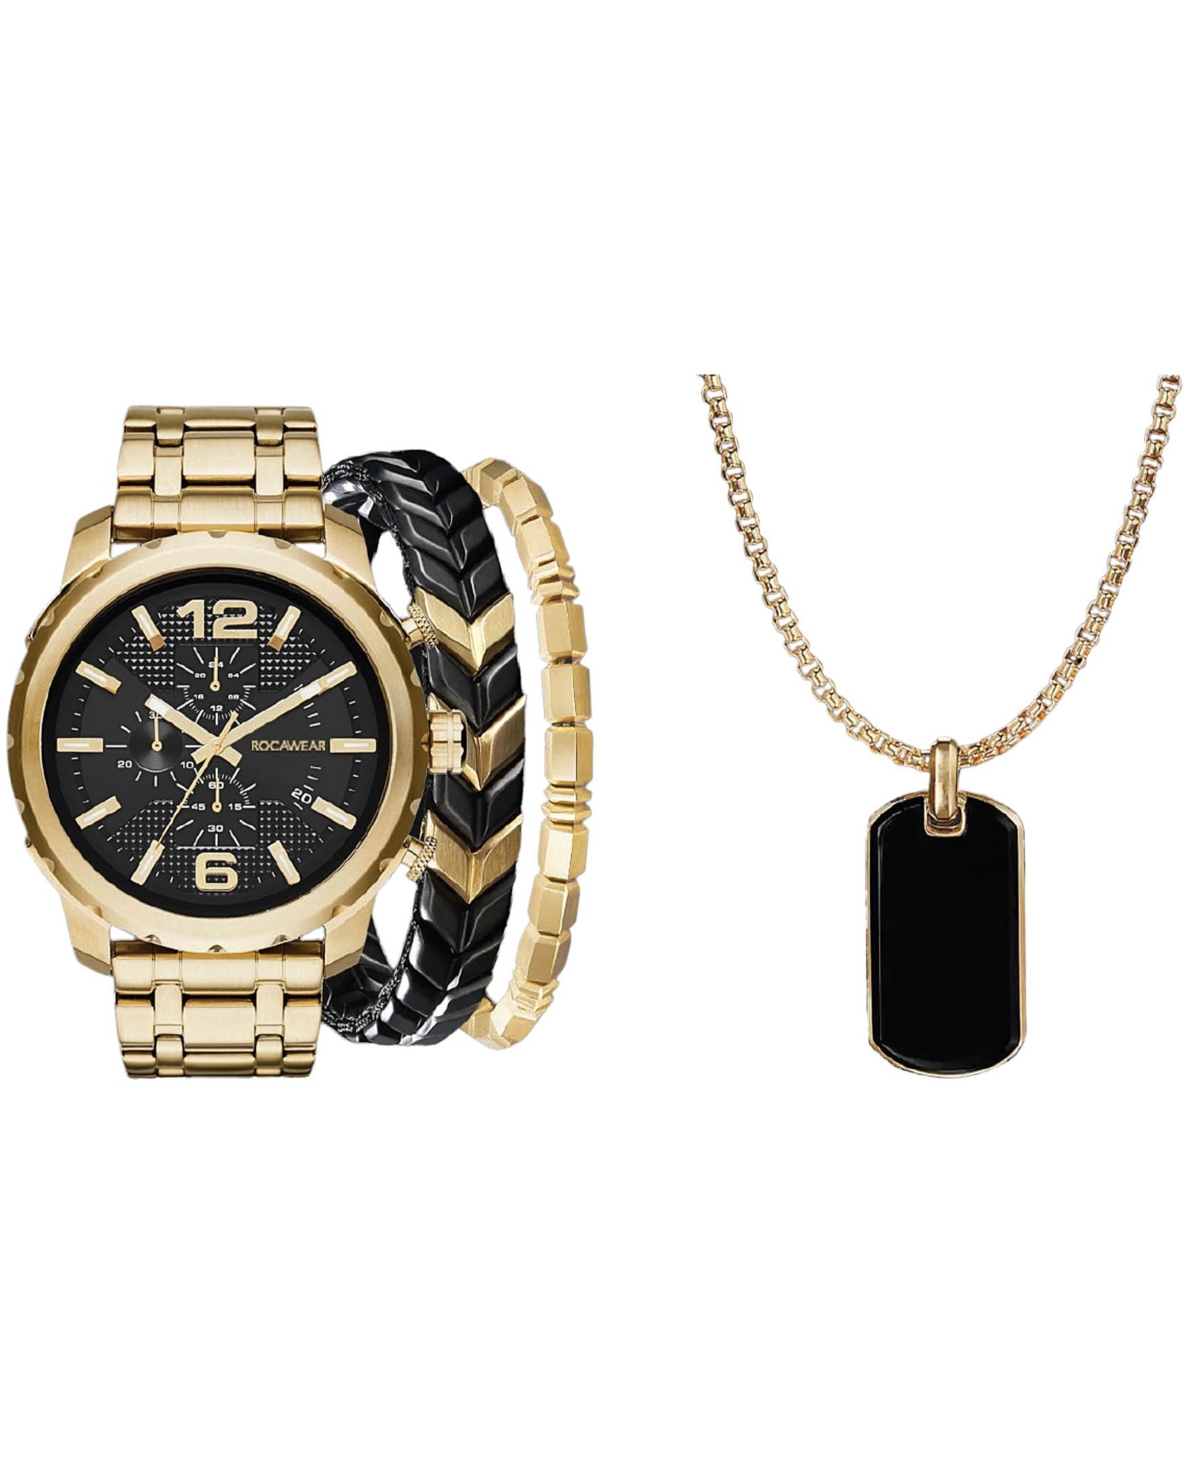 Men's Shiny Gold-Tone Metal Bracelet Watch 50mm Set - Black, Shiny Gold-Tone